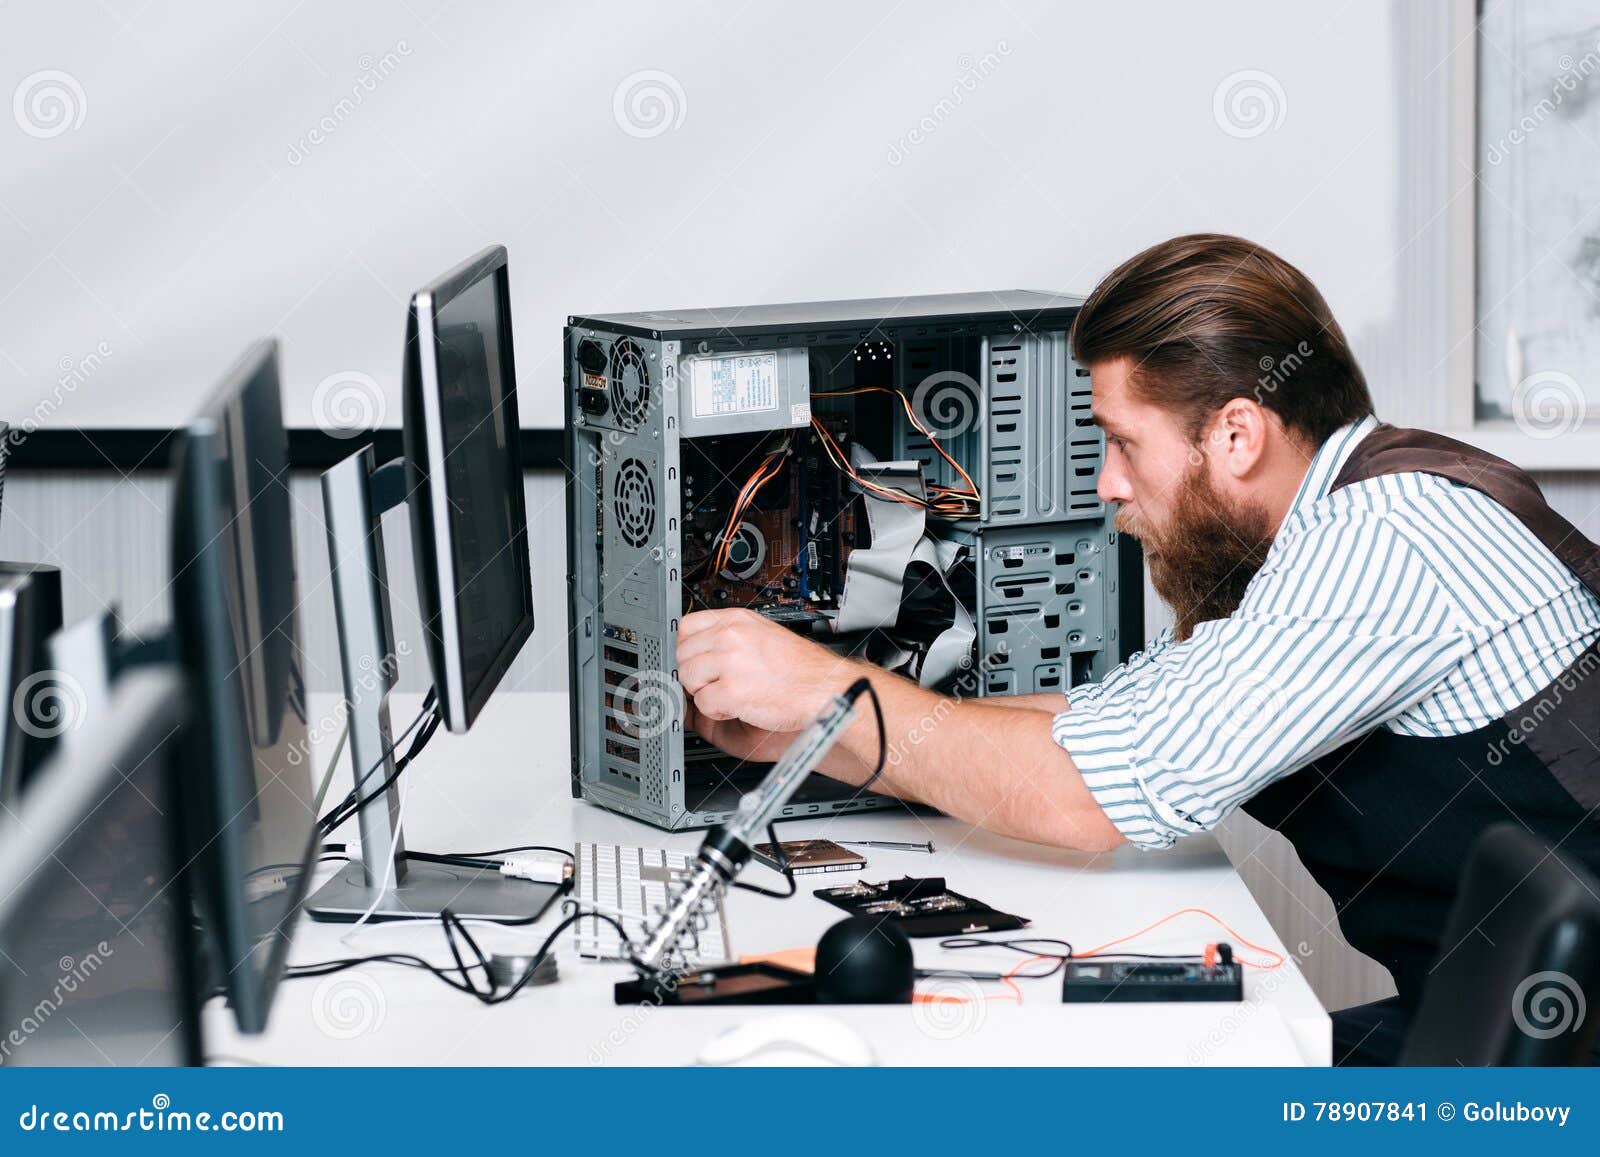 repairman fixing components in computer unit